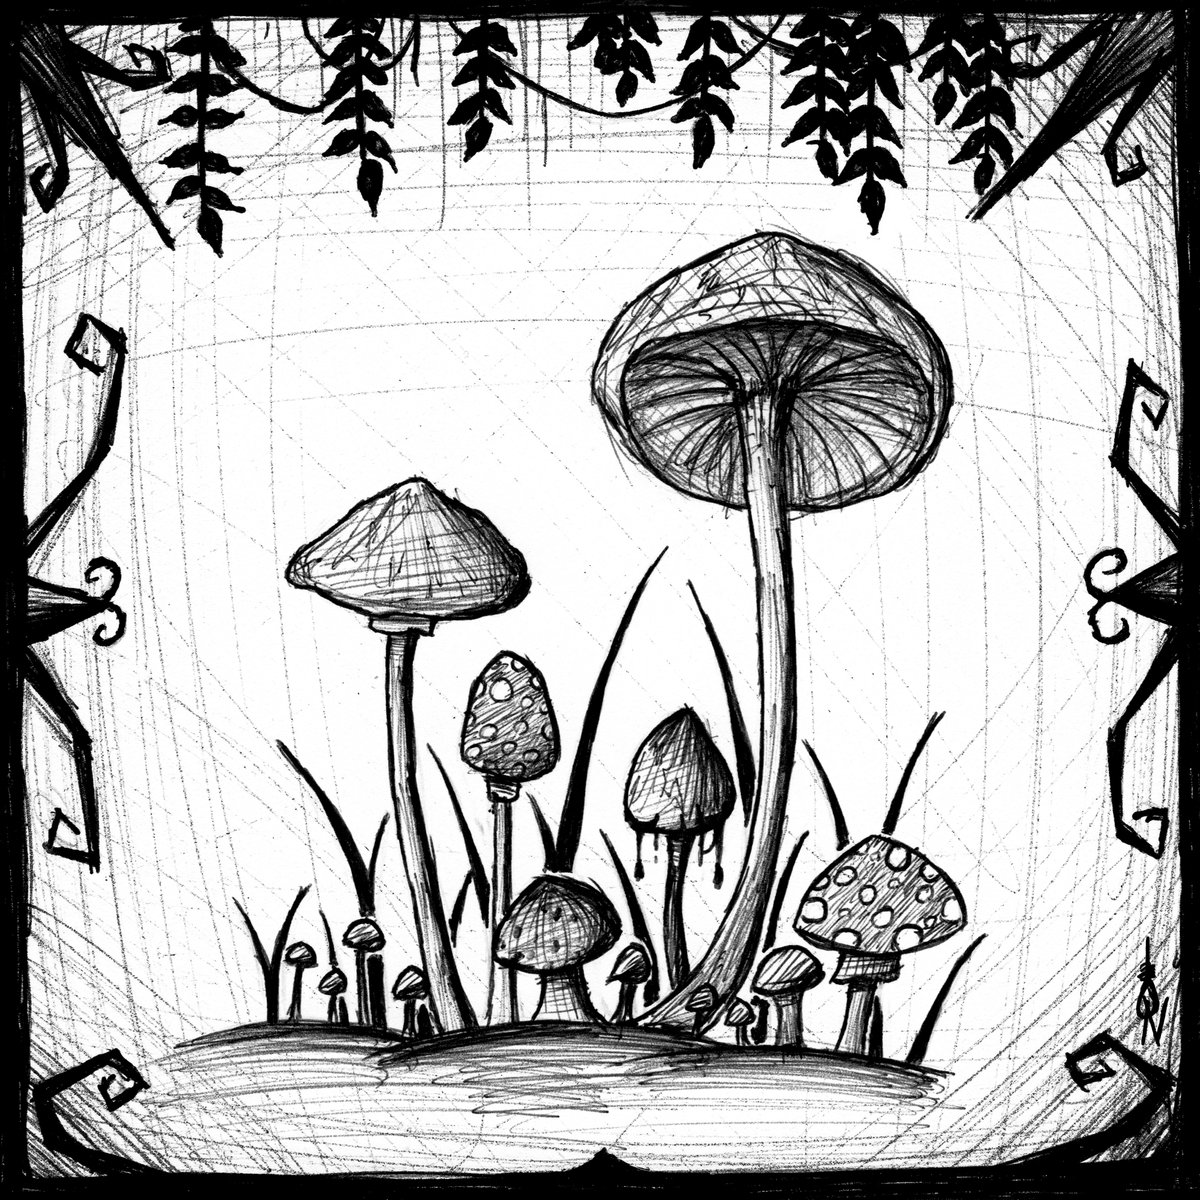 Mushrooms..
Nothing to add really, looks cute
#creepy #art #drawing #creepyart #horror #HorrorArt